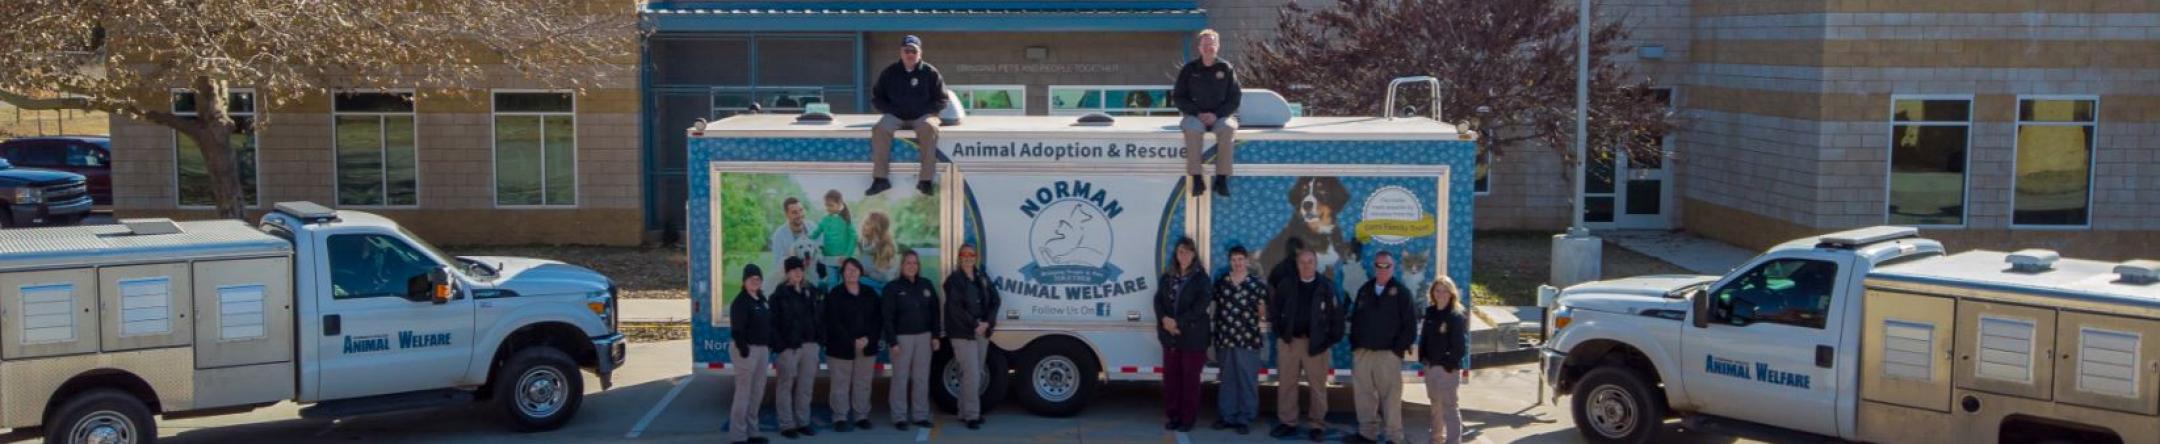 Animal Welfare - Staff Photo